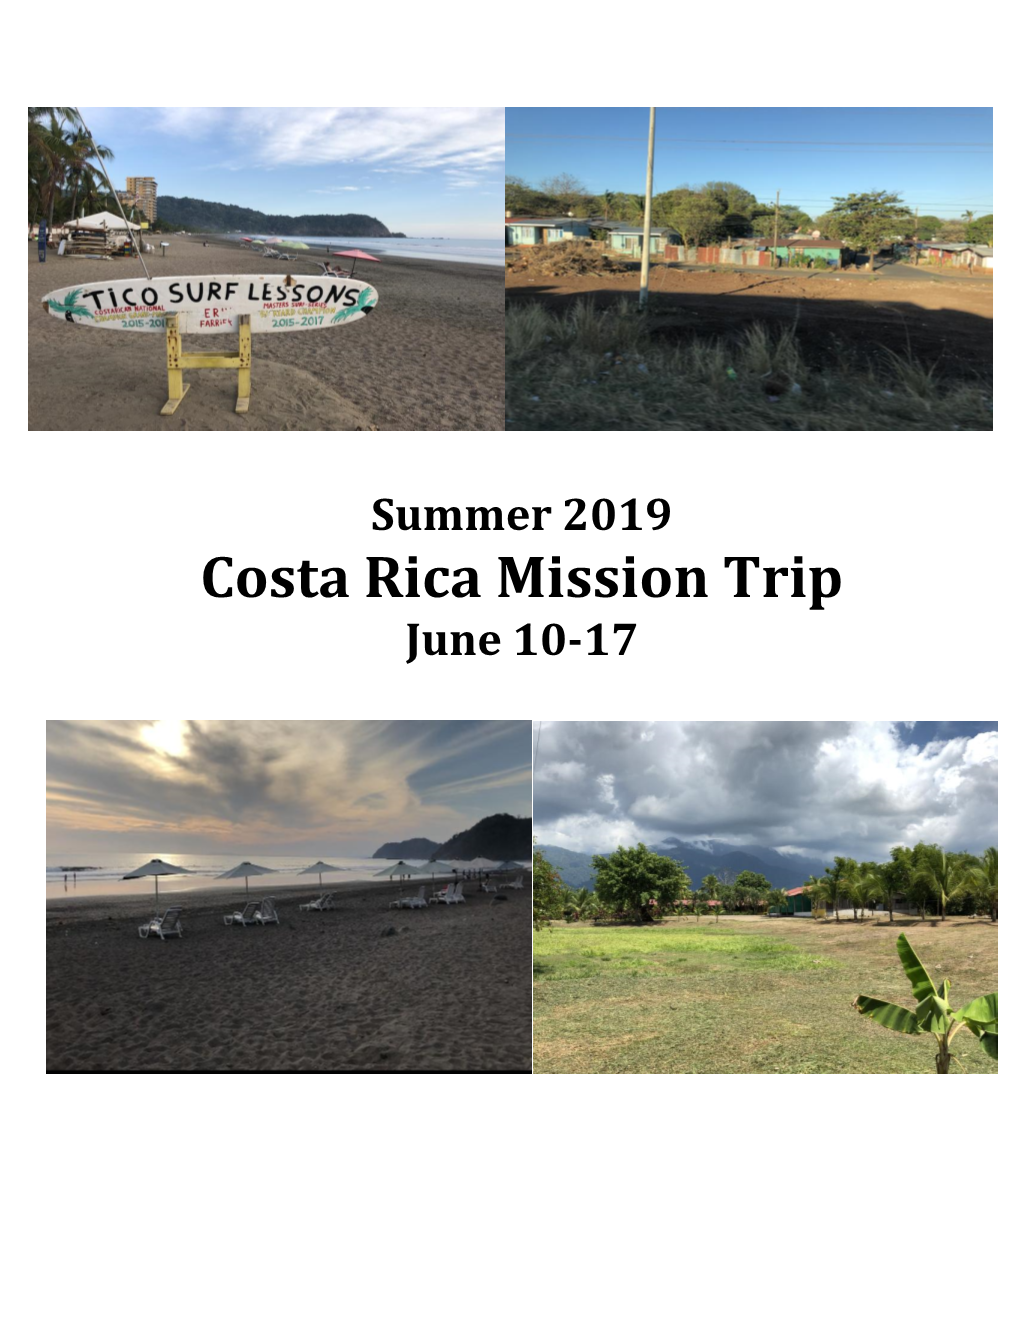 Costa Rica Mission Trip June 10-17